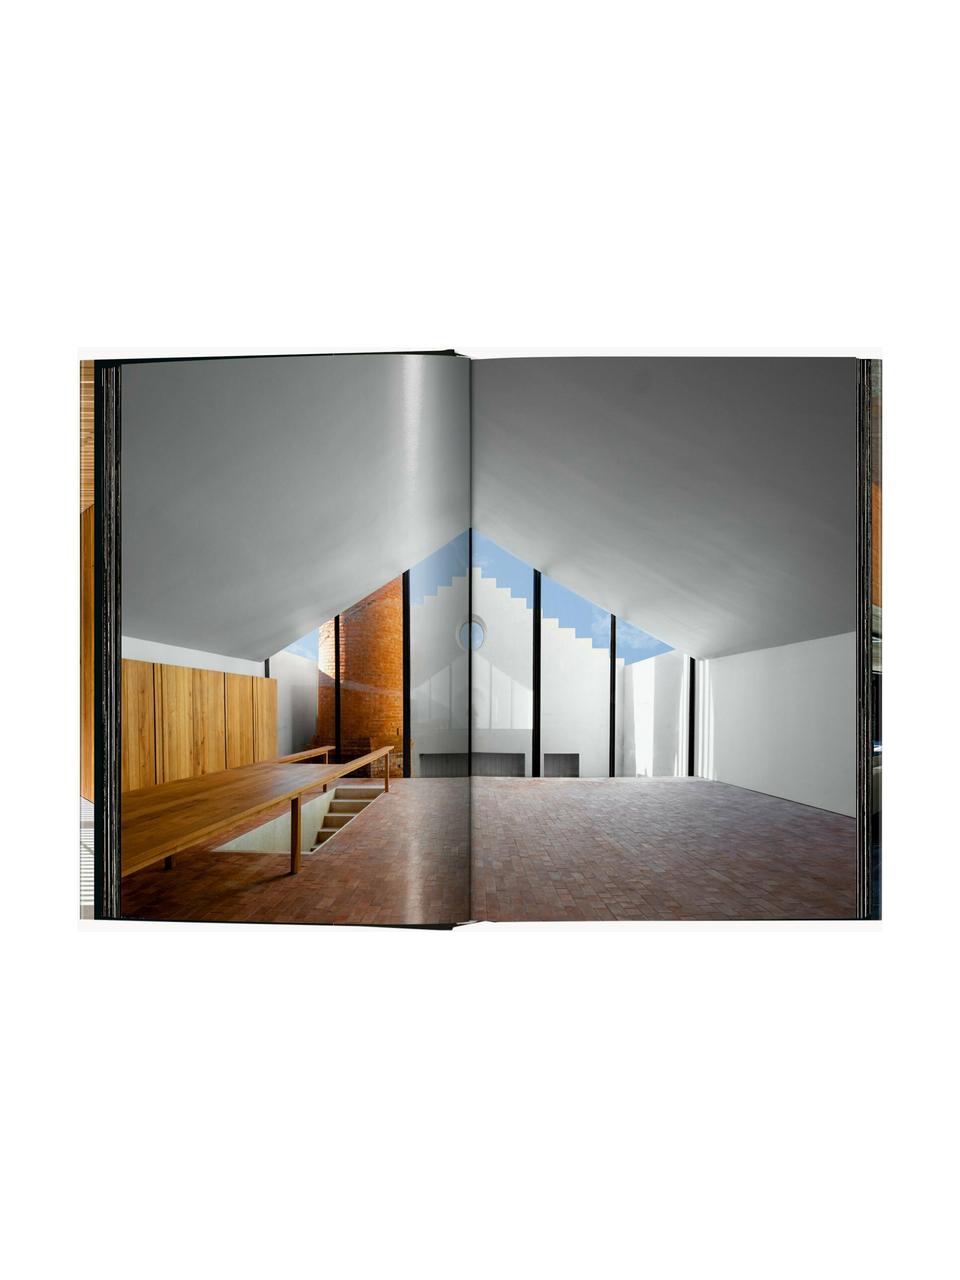 Libro illustrato Homes for our Time Vol. 2, Carta, cornice rigida, Homes for our Time Vol. 2, Larg. 25 x Alt. 37 cm